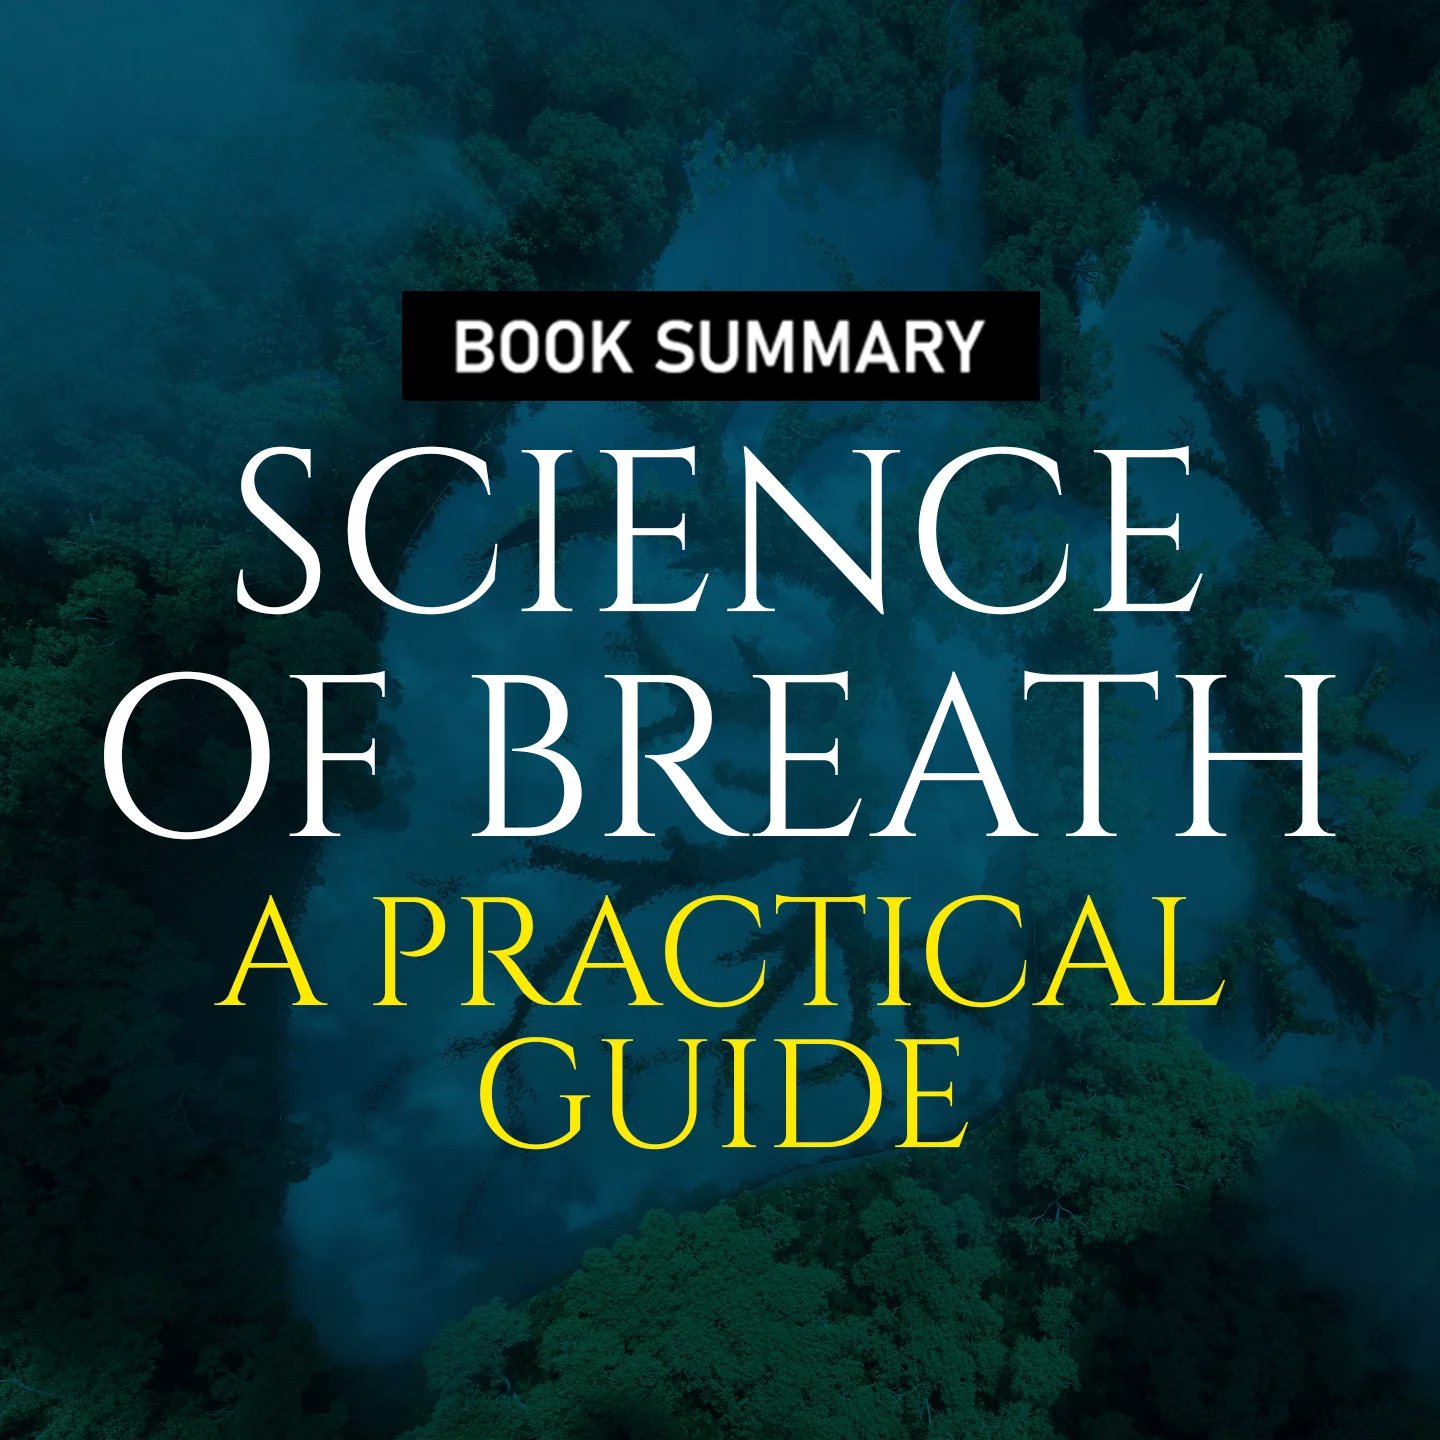 10. Mechanism Of Breath